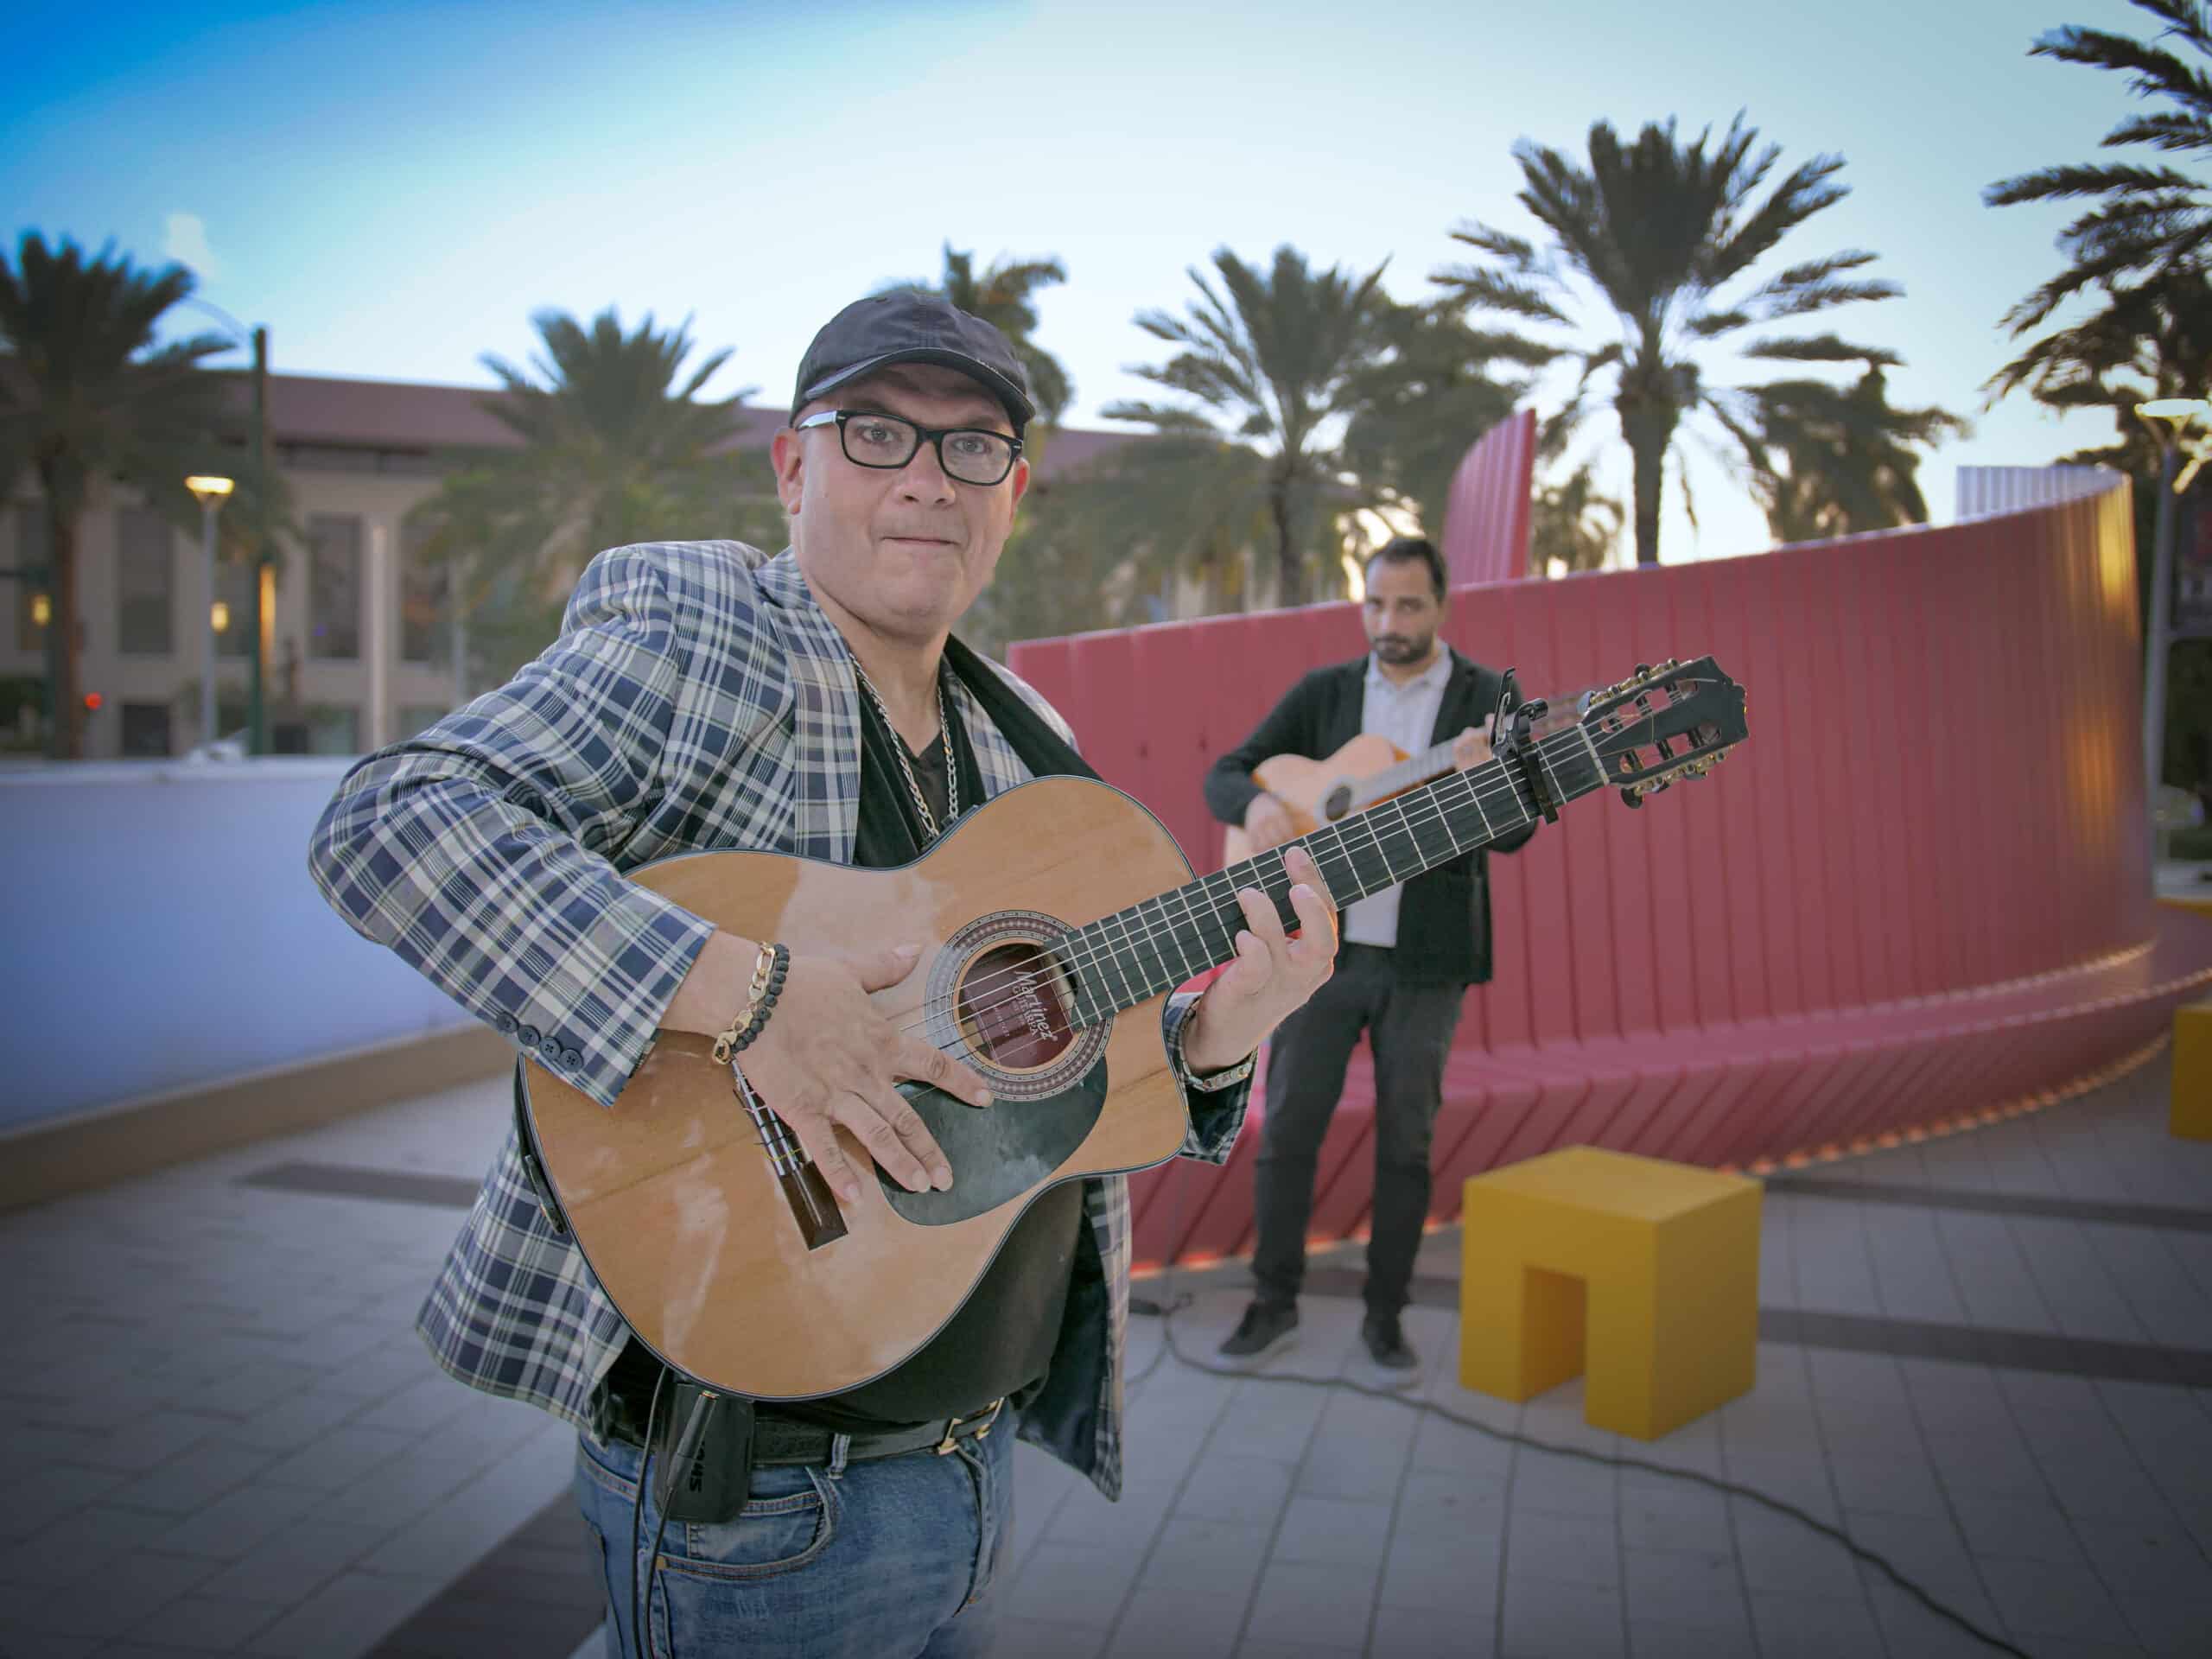 Gyorgy Lakatos on plaza preforming with guitar